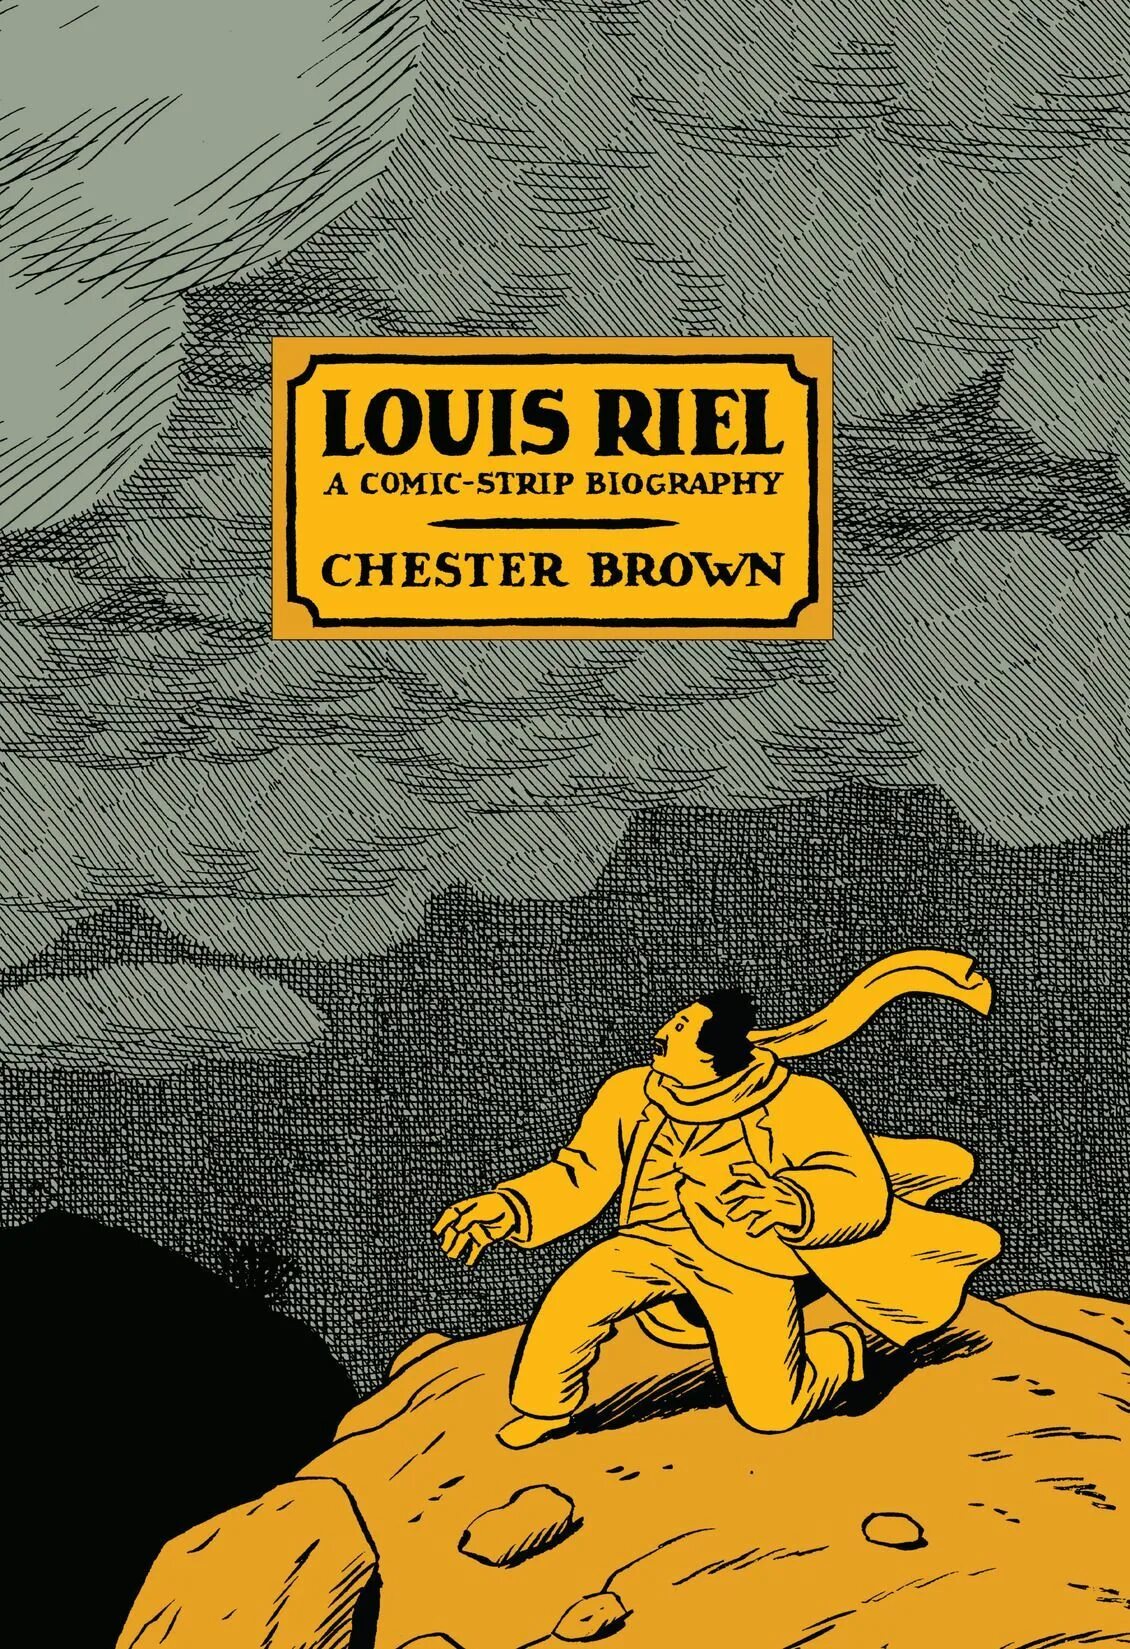 This book yet. Louis Riel книга. Луи комикс. Честер и Луи. Честер Броун.